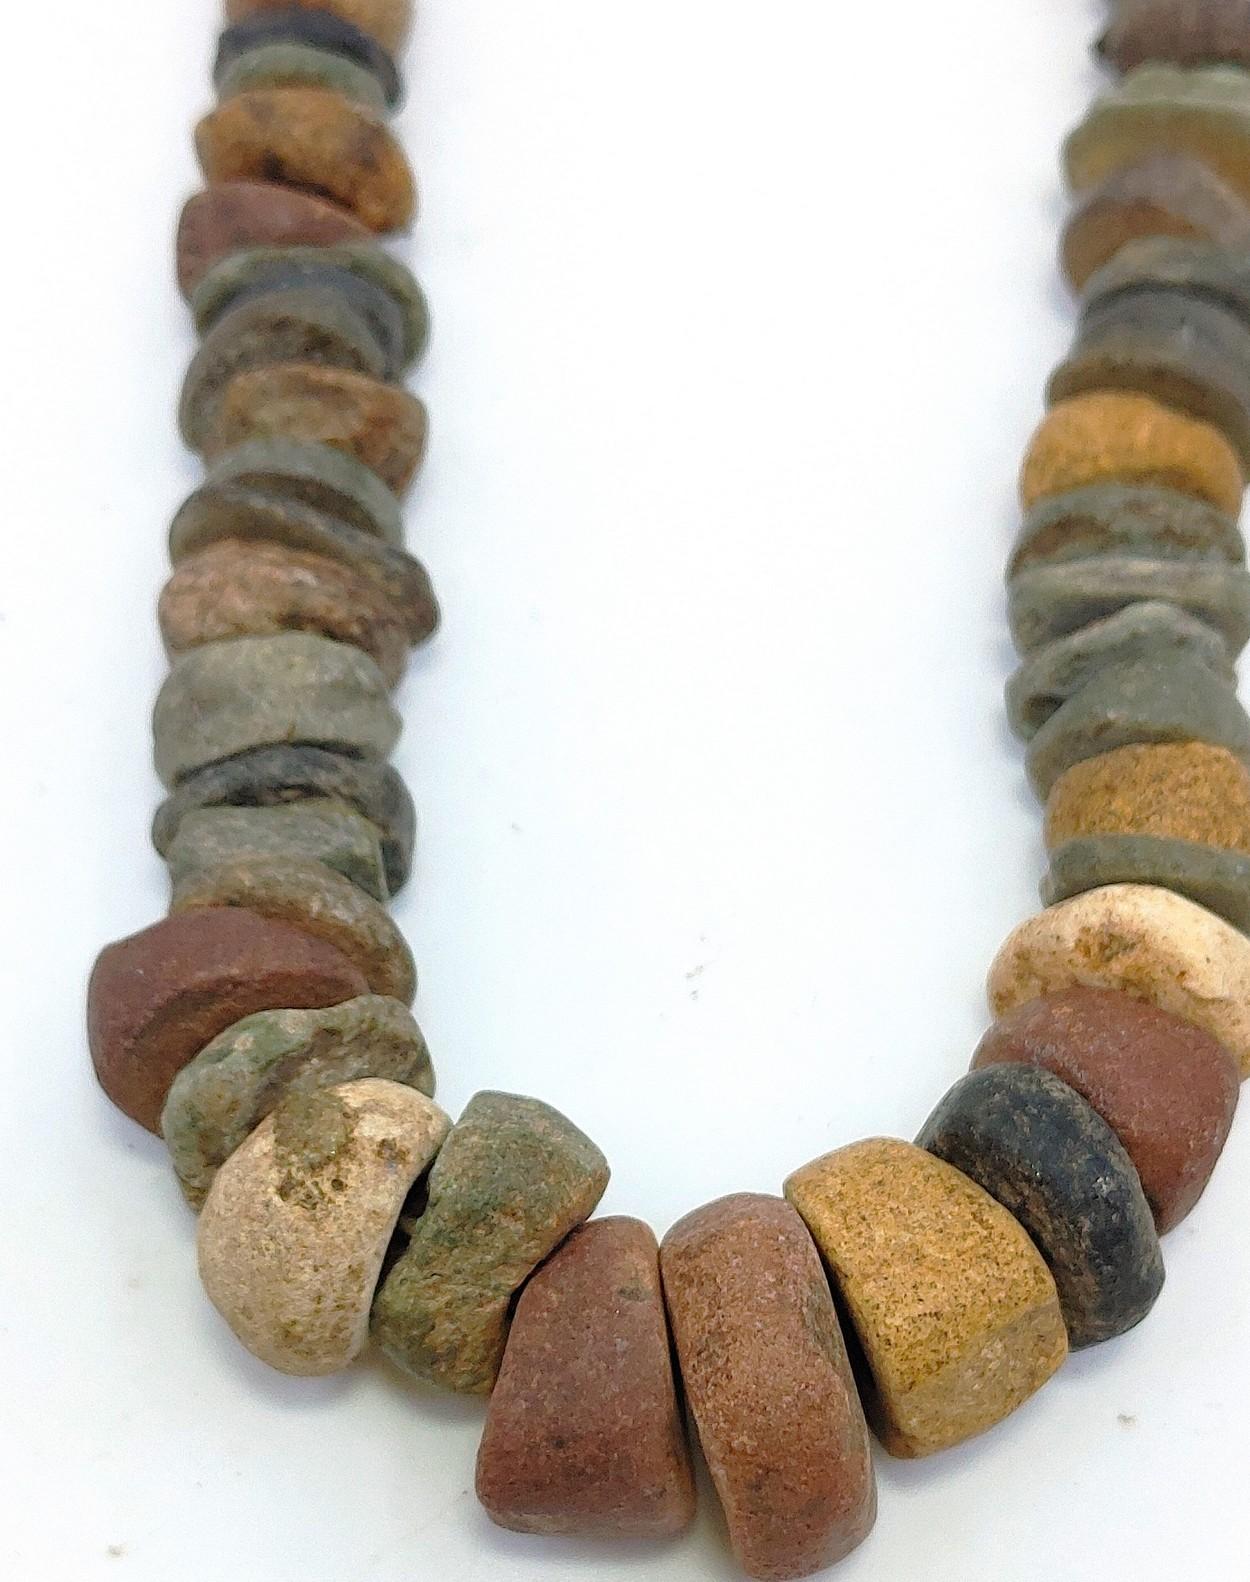 Pre-Columbian Stone Beaded Necklace